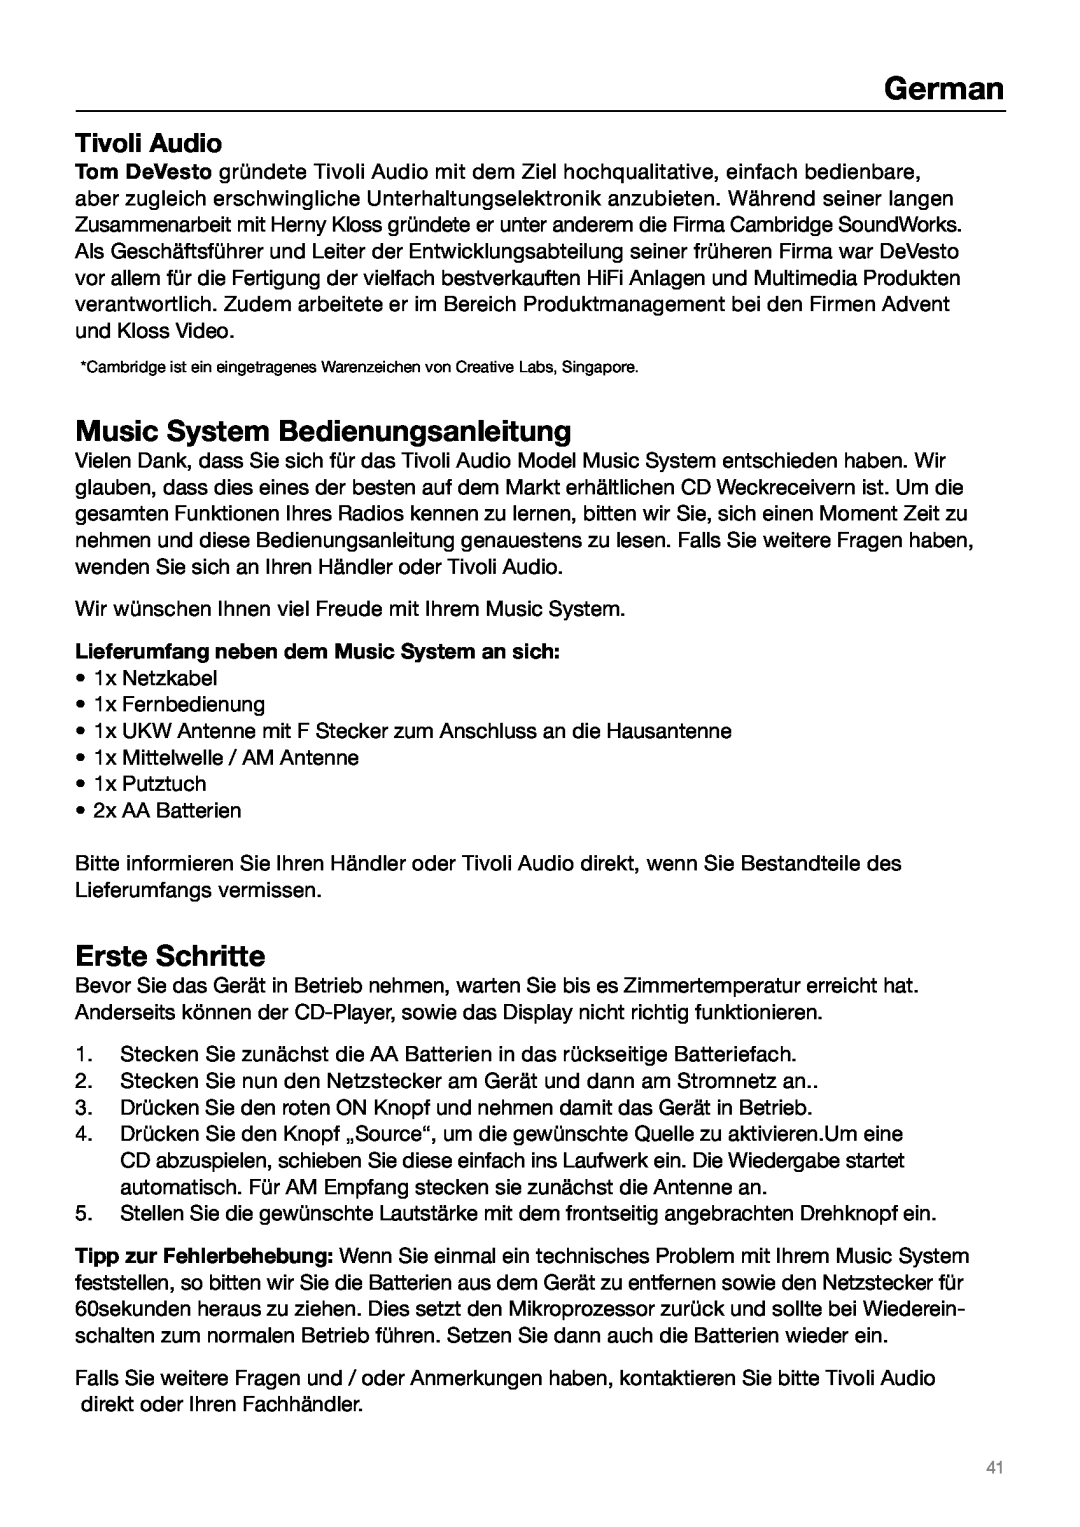 Tivoli Audio MUSIC SYSTEM owner manual German, Music System Bedienungsanleitung, Erste Schritte, Tivoli Audio 